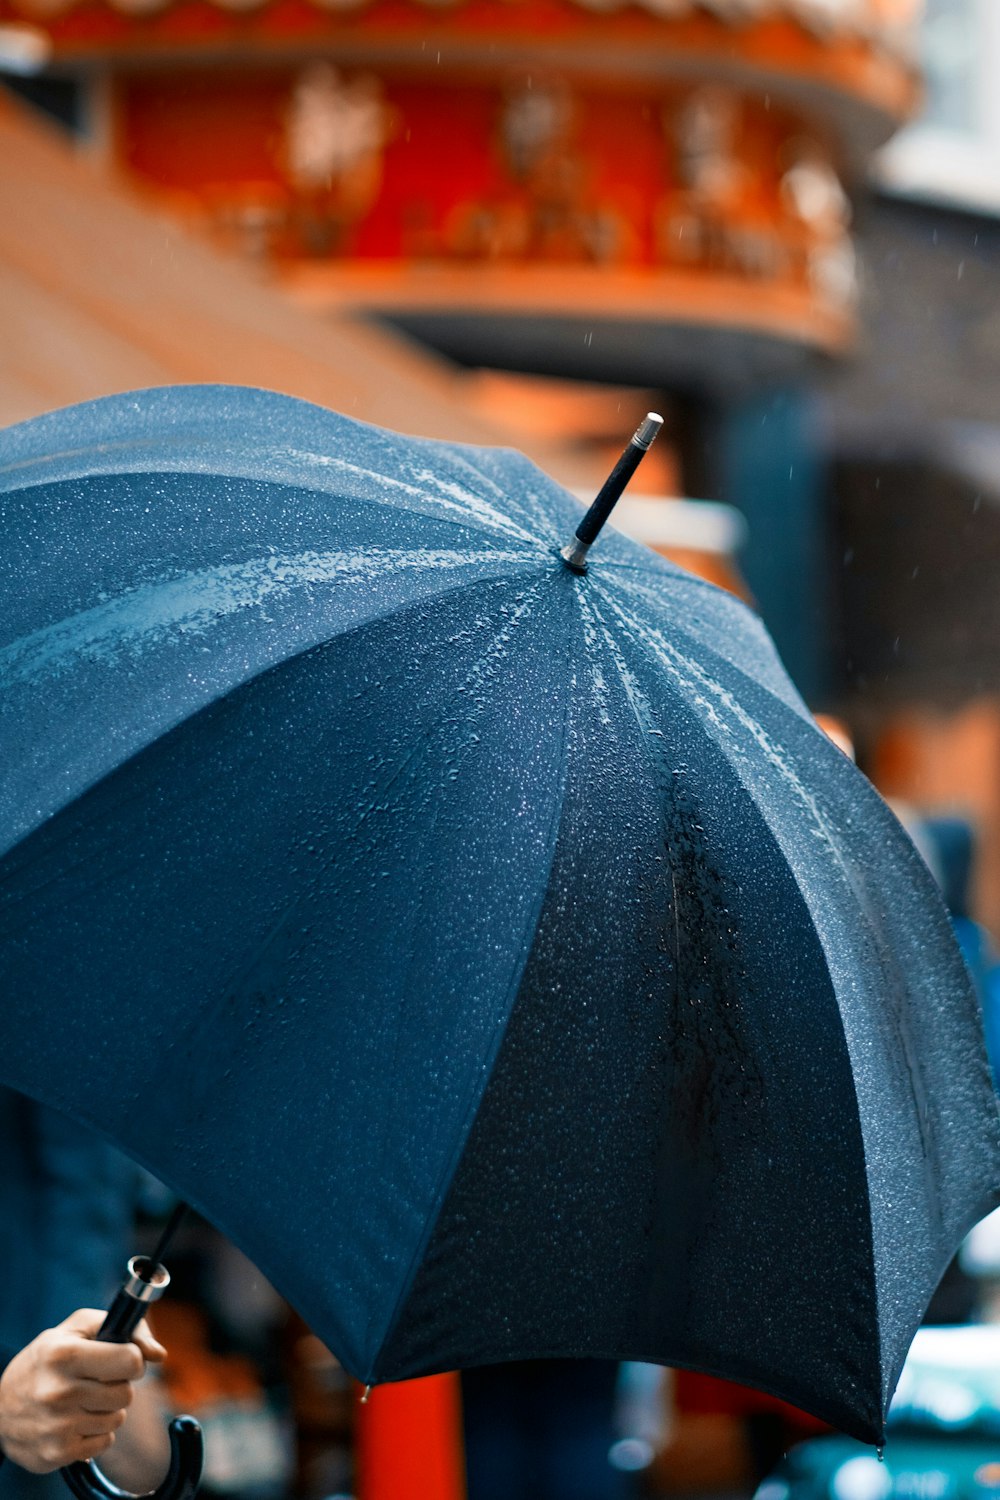 pessoa segurando guarda-chuva enquanto chove